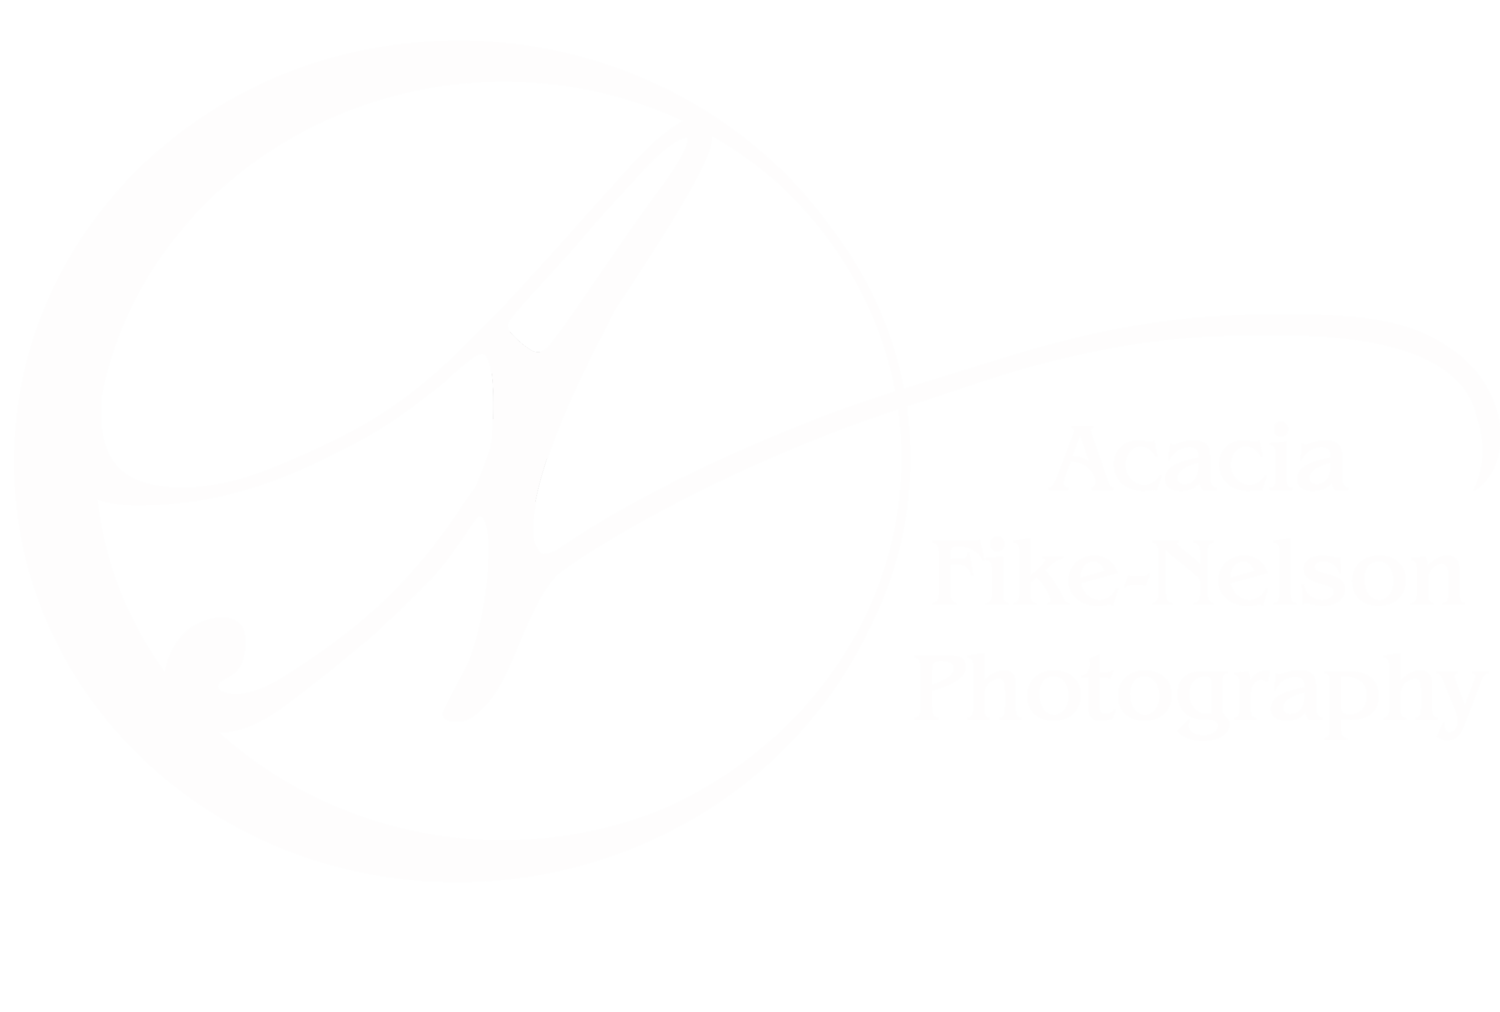 Acacia Fike-Nelson Photography